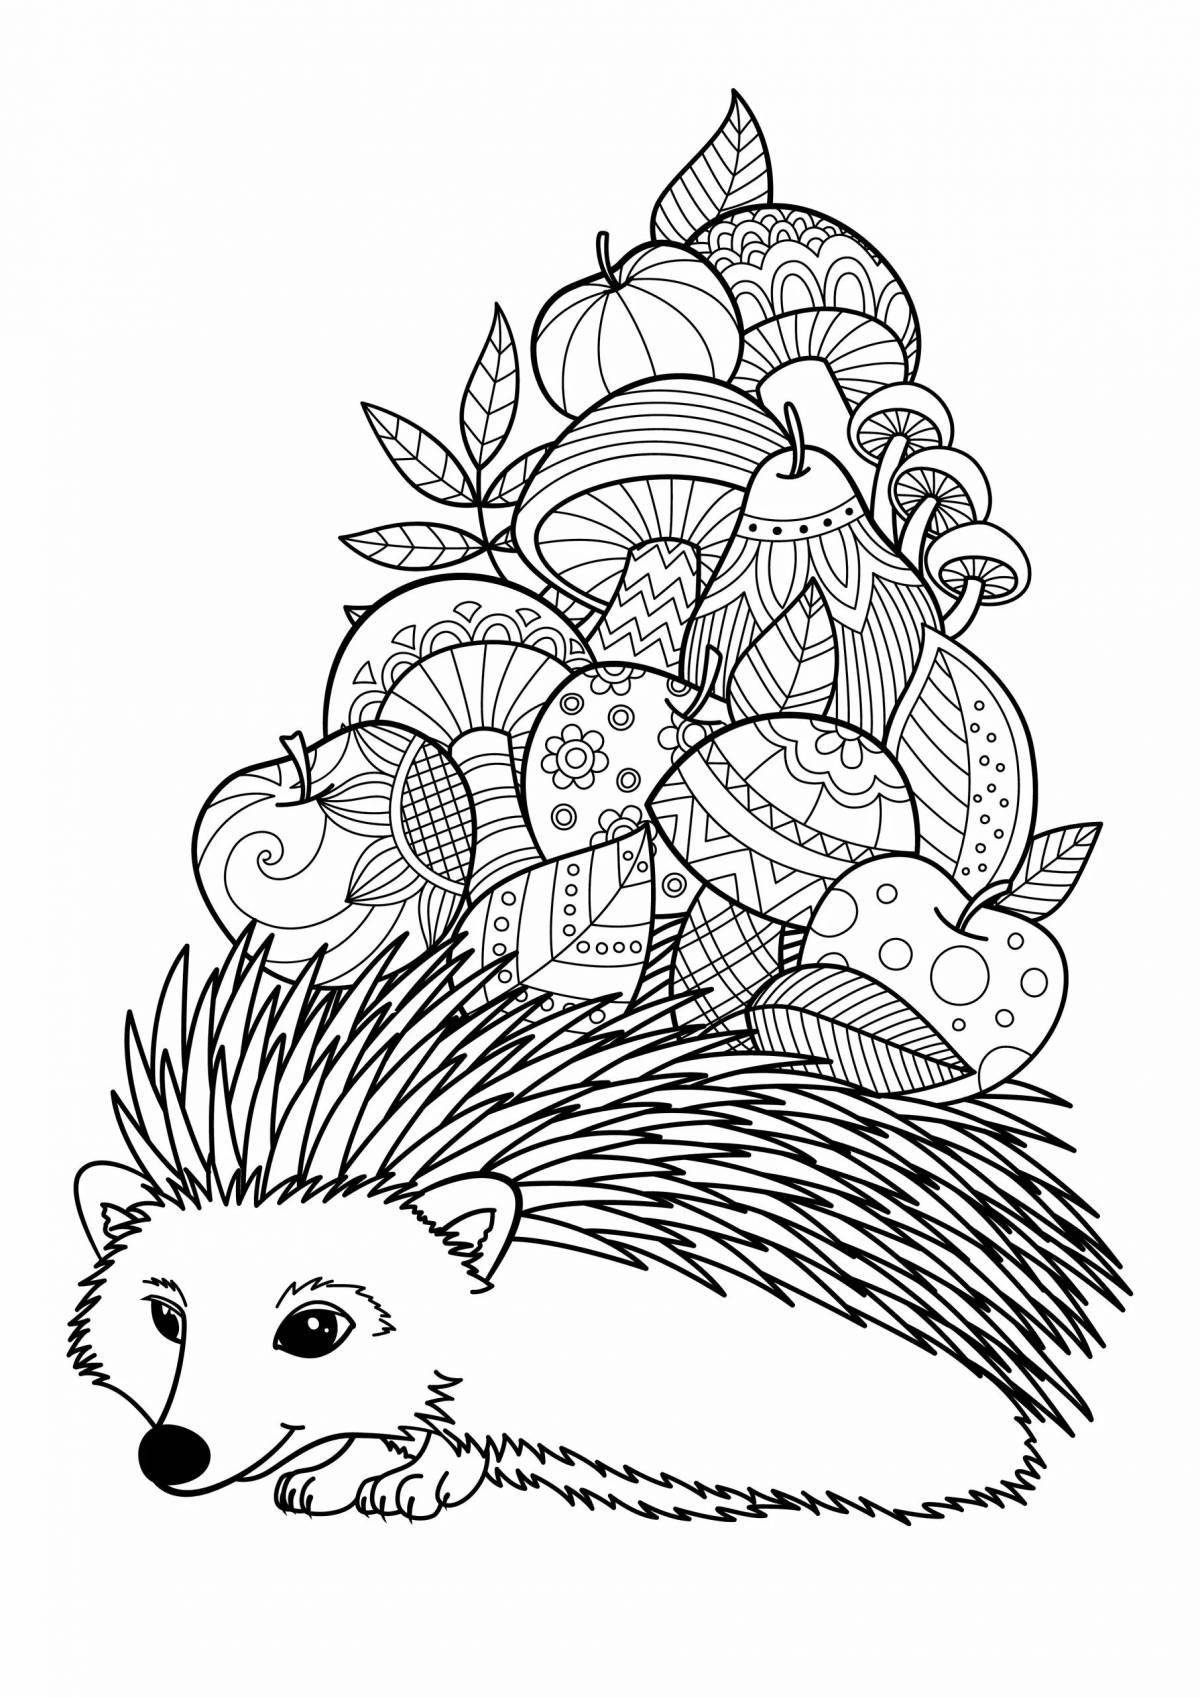 Coloring book joyful antistress hedgehog